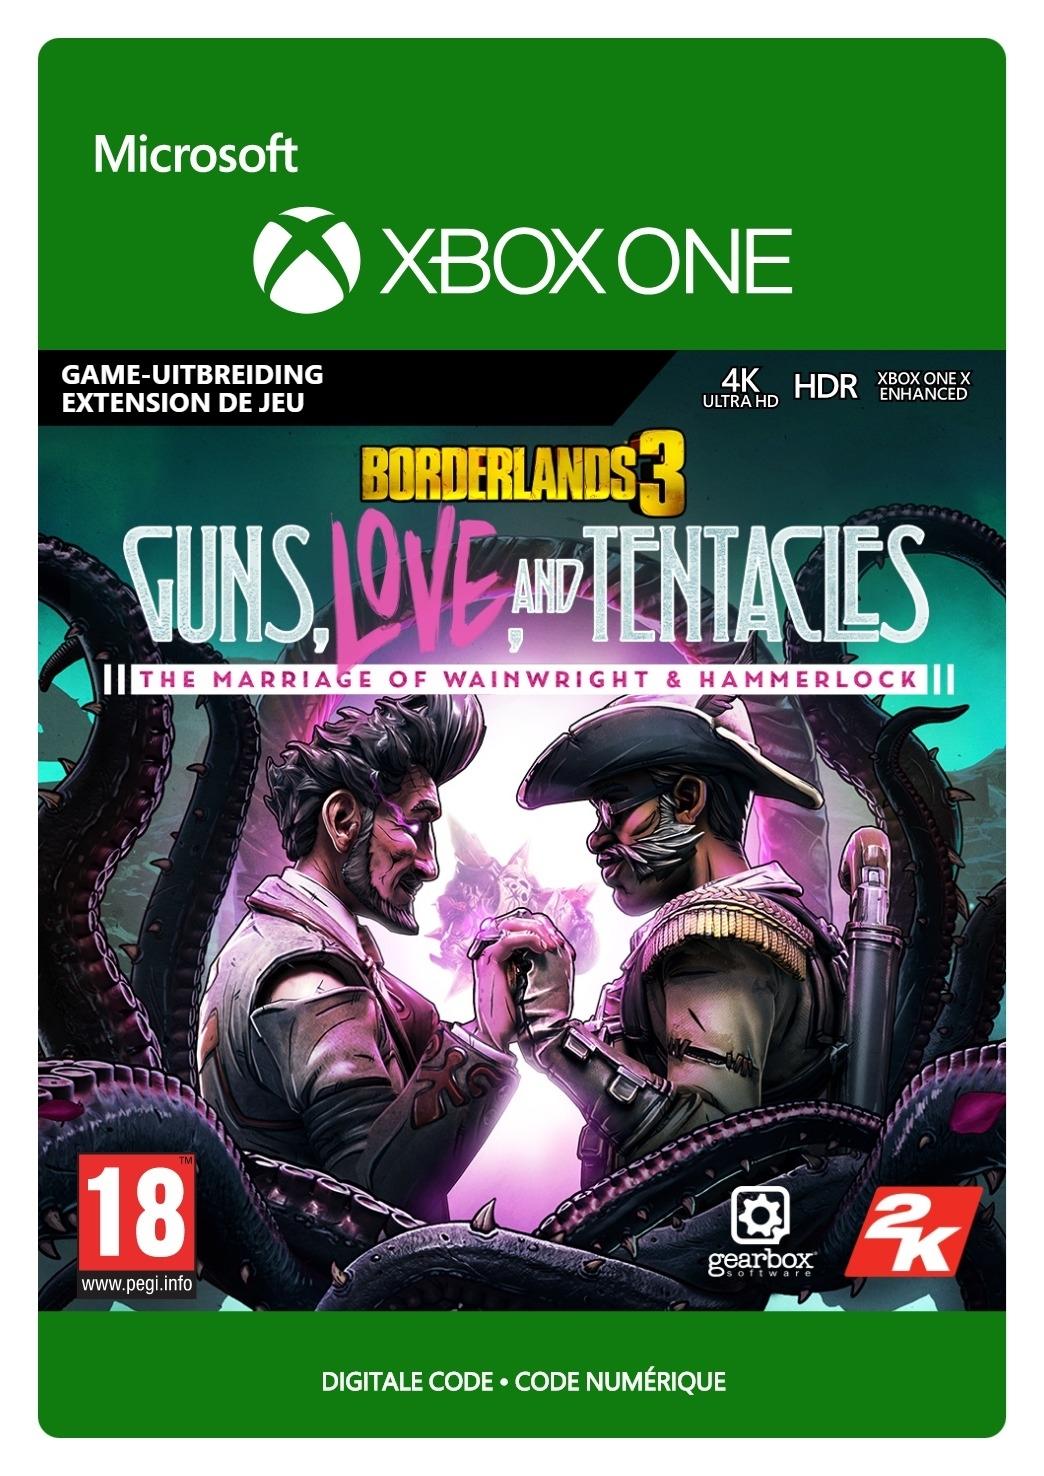 Borderlands 3: Guns, Love, and Tentacles - Xbox One - Add-on | 7D4-00545 (ba319bf0-1cbf-1c49-9d86-45b2a69b984a)